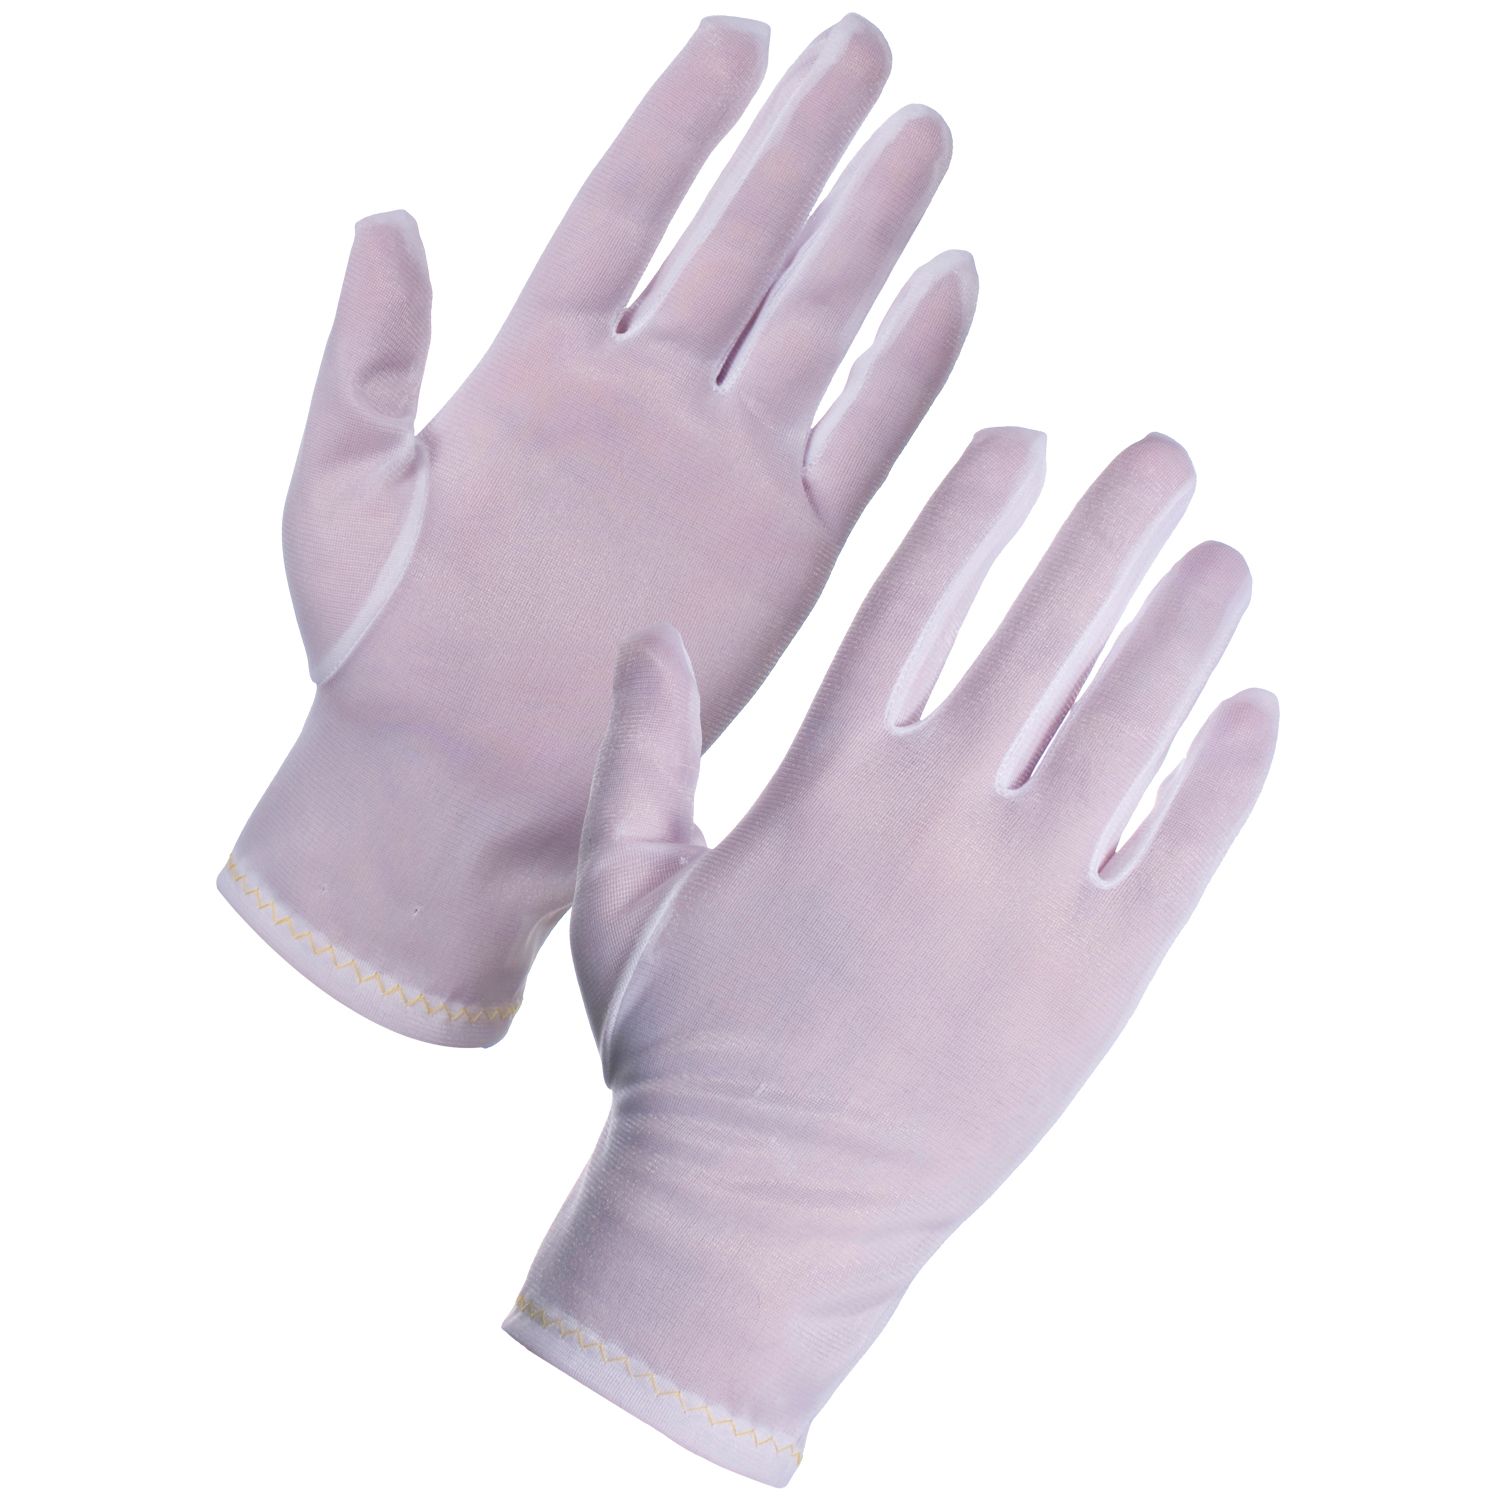 Inspection Glove